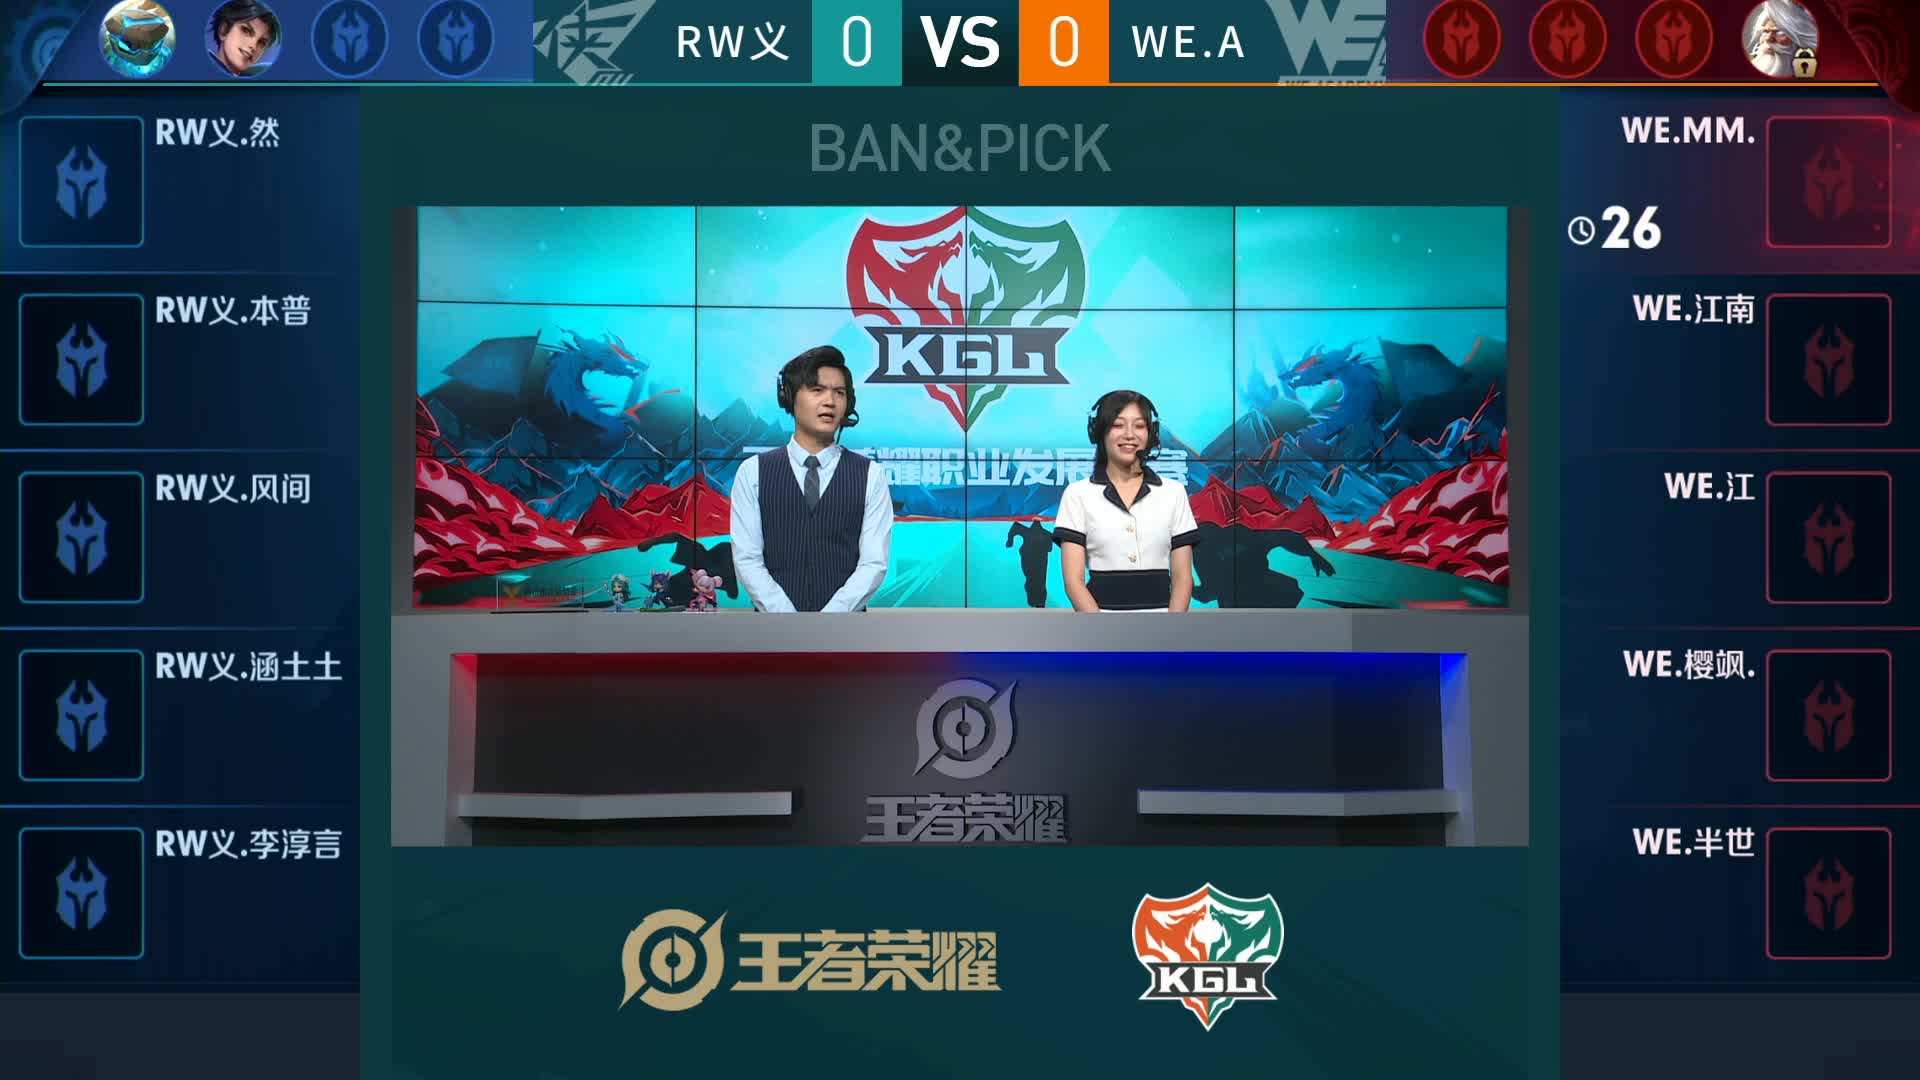 WE.A vs RW义 KGL常规赛